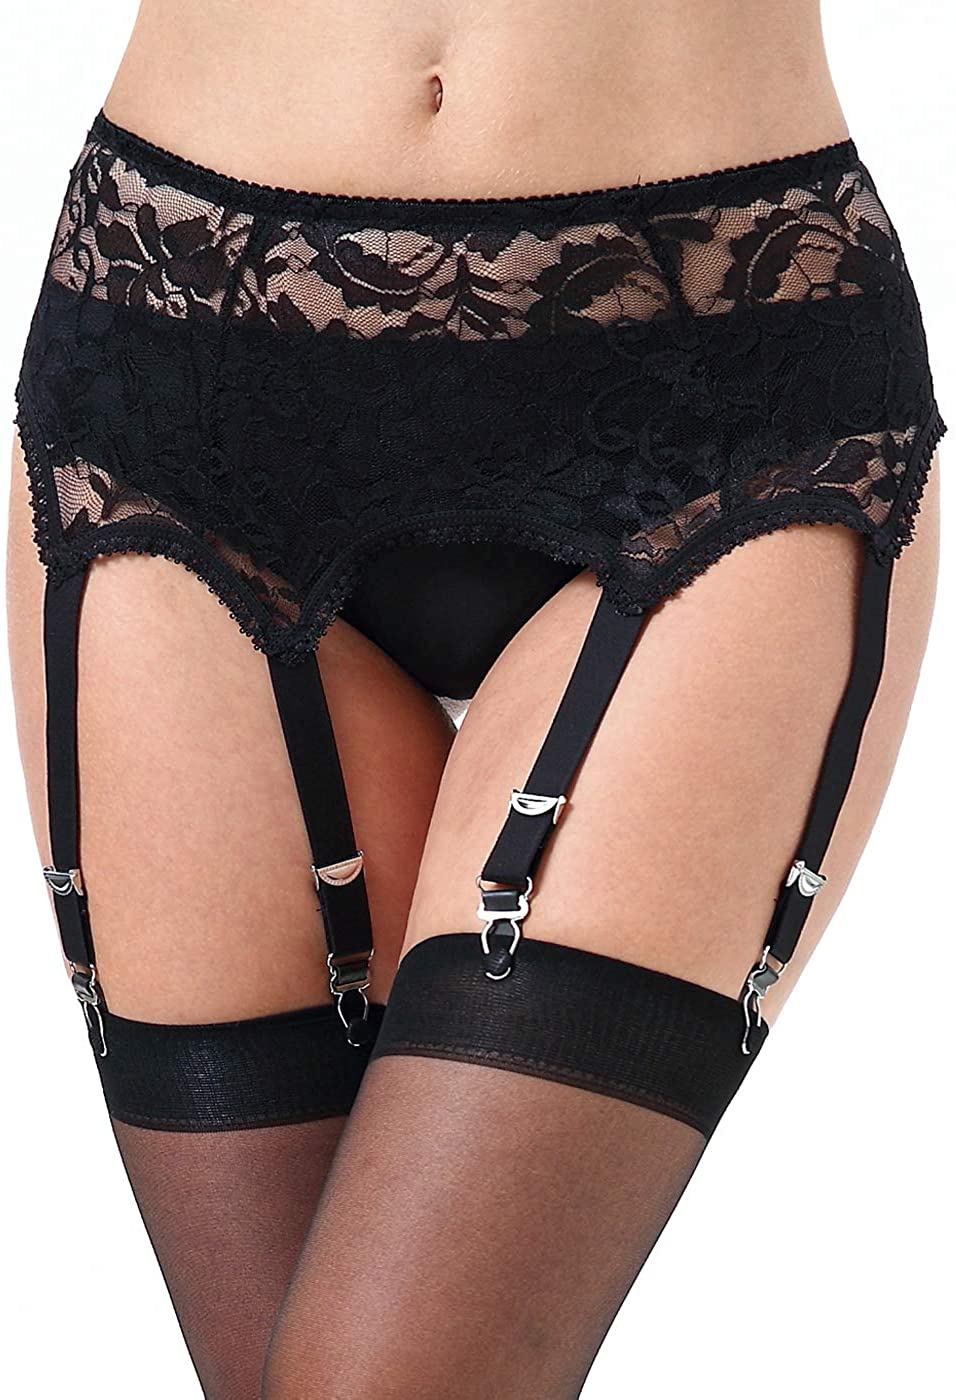 E Laurels Lace Sexy Womens Mesh Suspendergarter Belt With Black